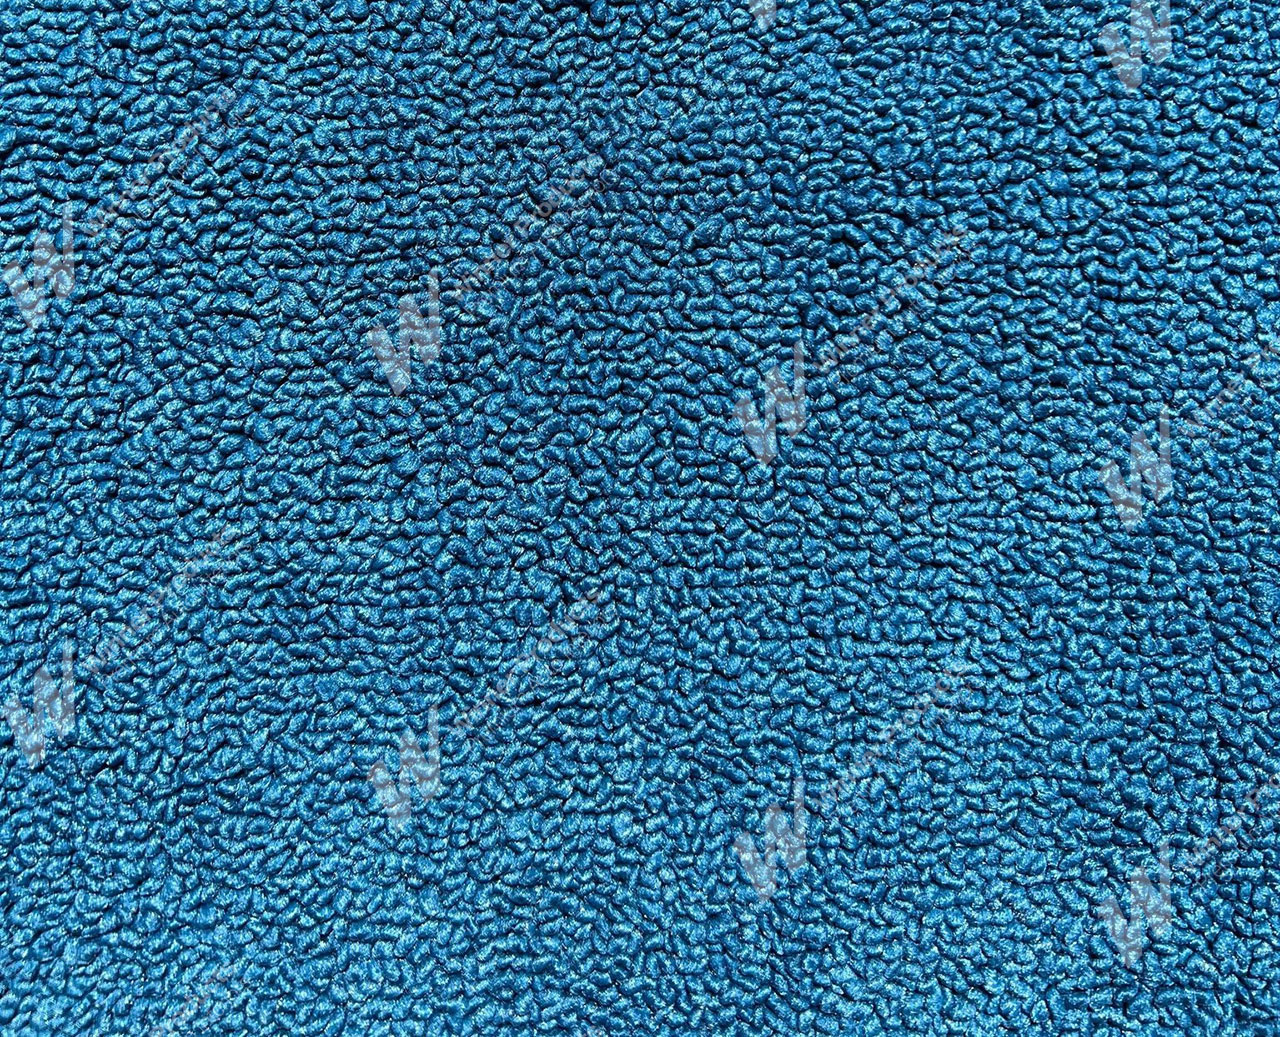 Holden Monaro HT Monaro GTS Coupe 14Y Twilight Blue & Houndstooth Carpet (Image 1 of 1)